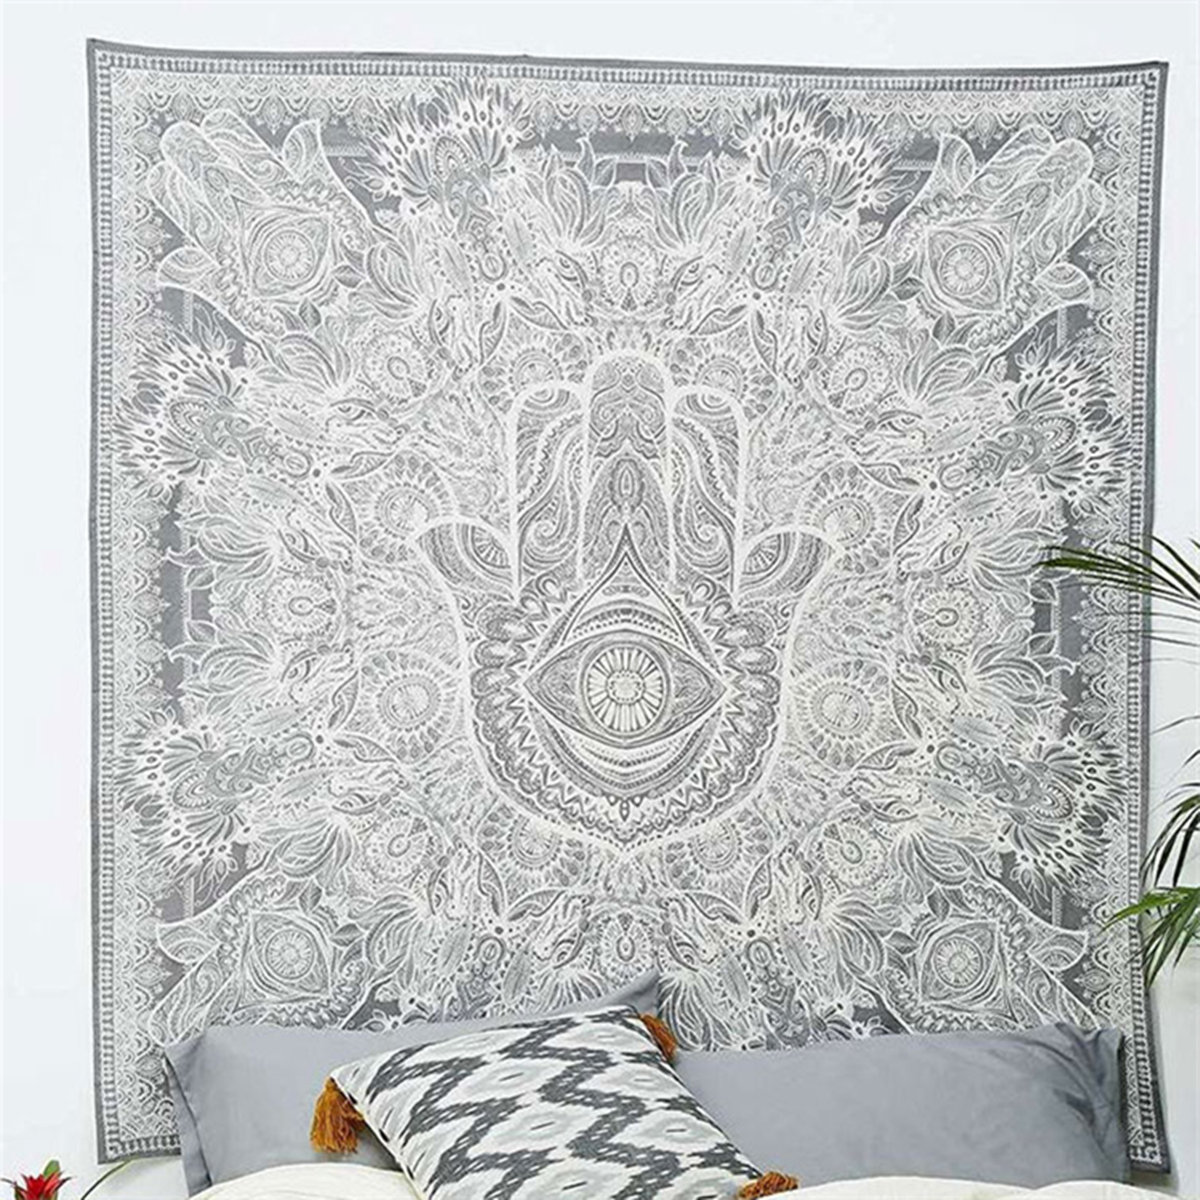 

210*145cm Hand Indian Ethnic Mandala Bedspread Throw Mat Wall Hanging Tapestry Rug Decor